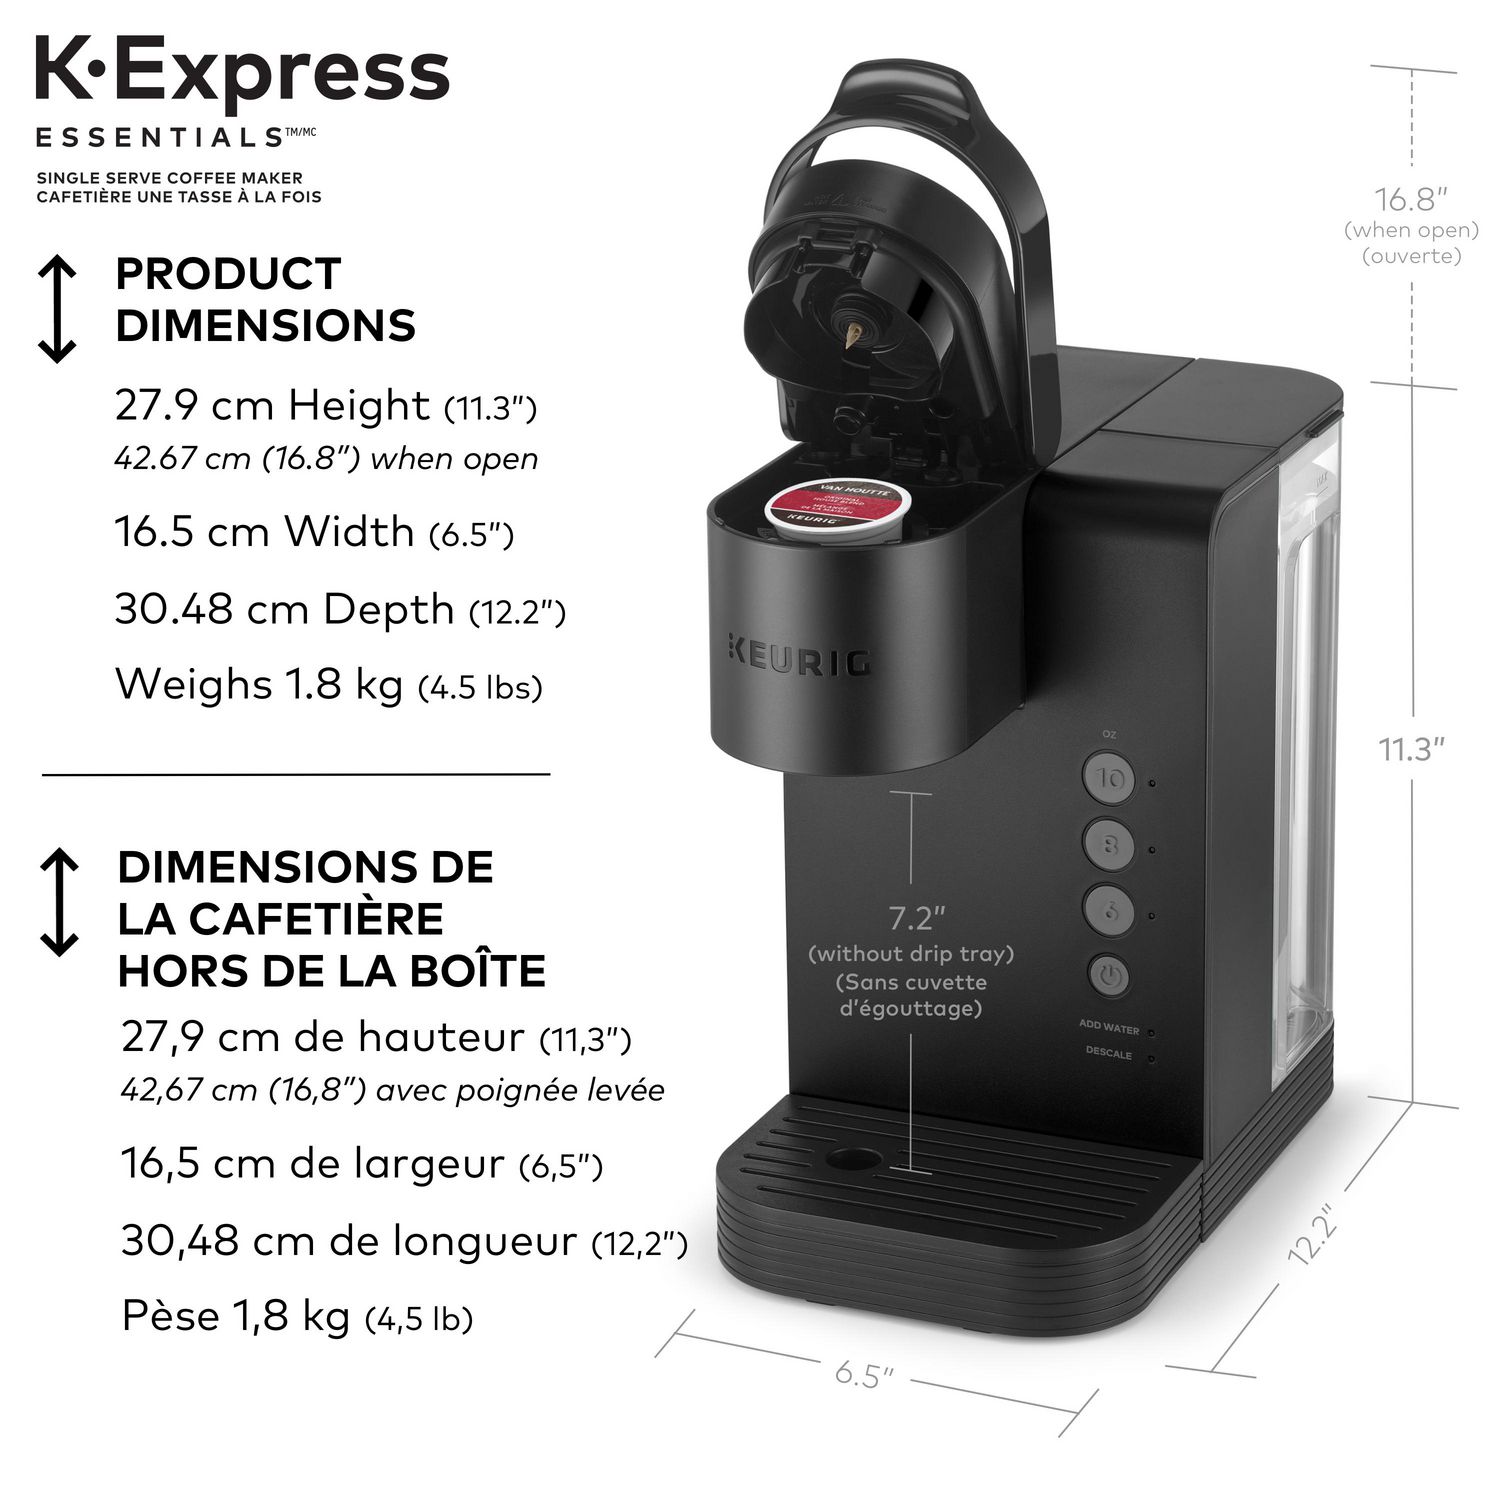 Keurig K-Express Essentials Single Serve Coffee Maker, Perfect for